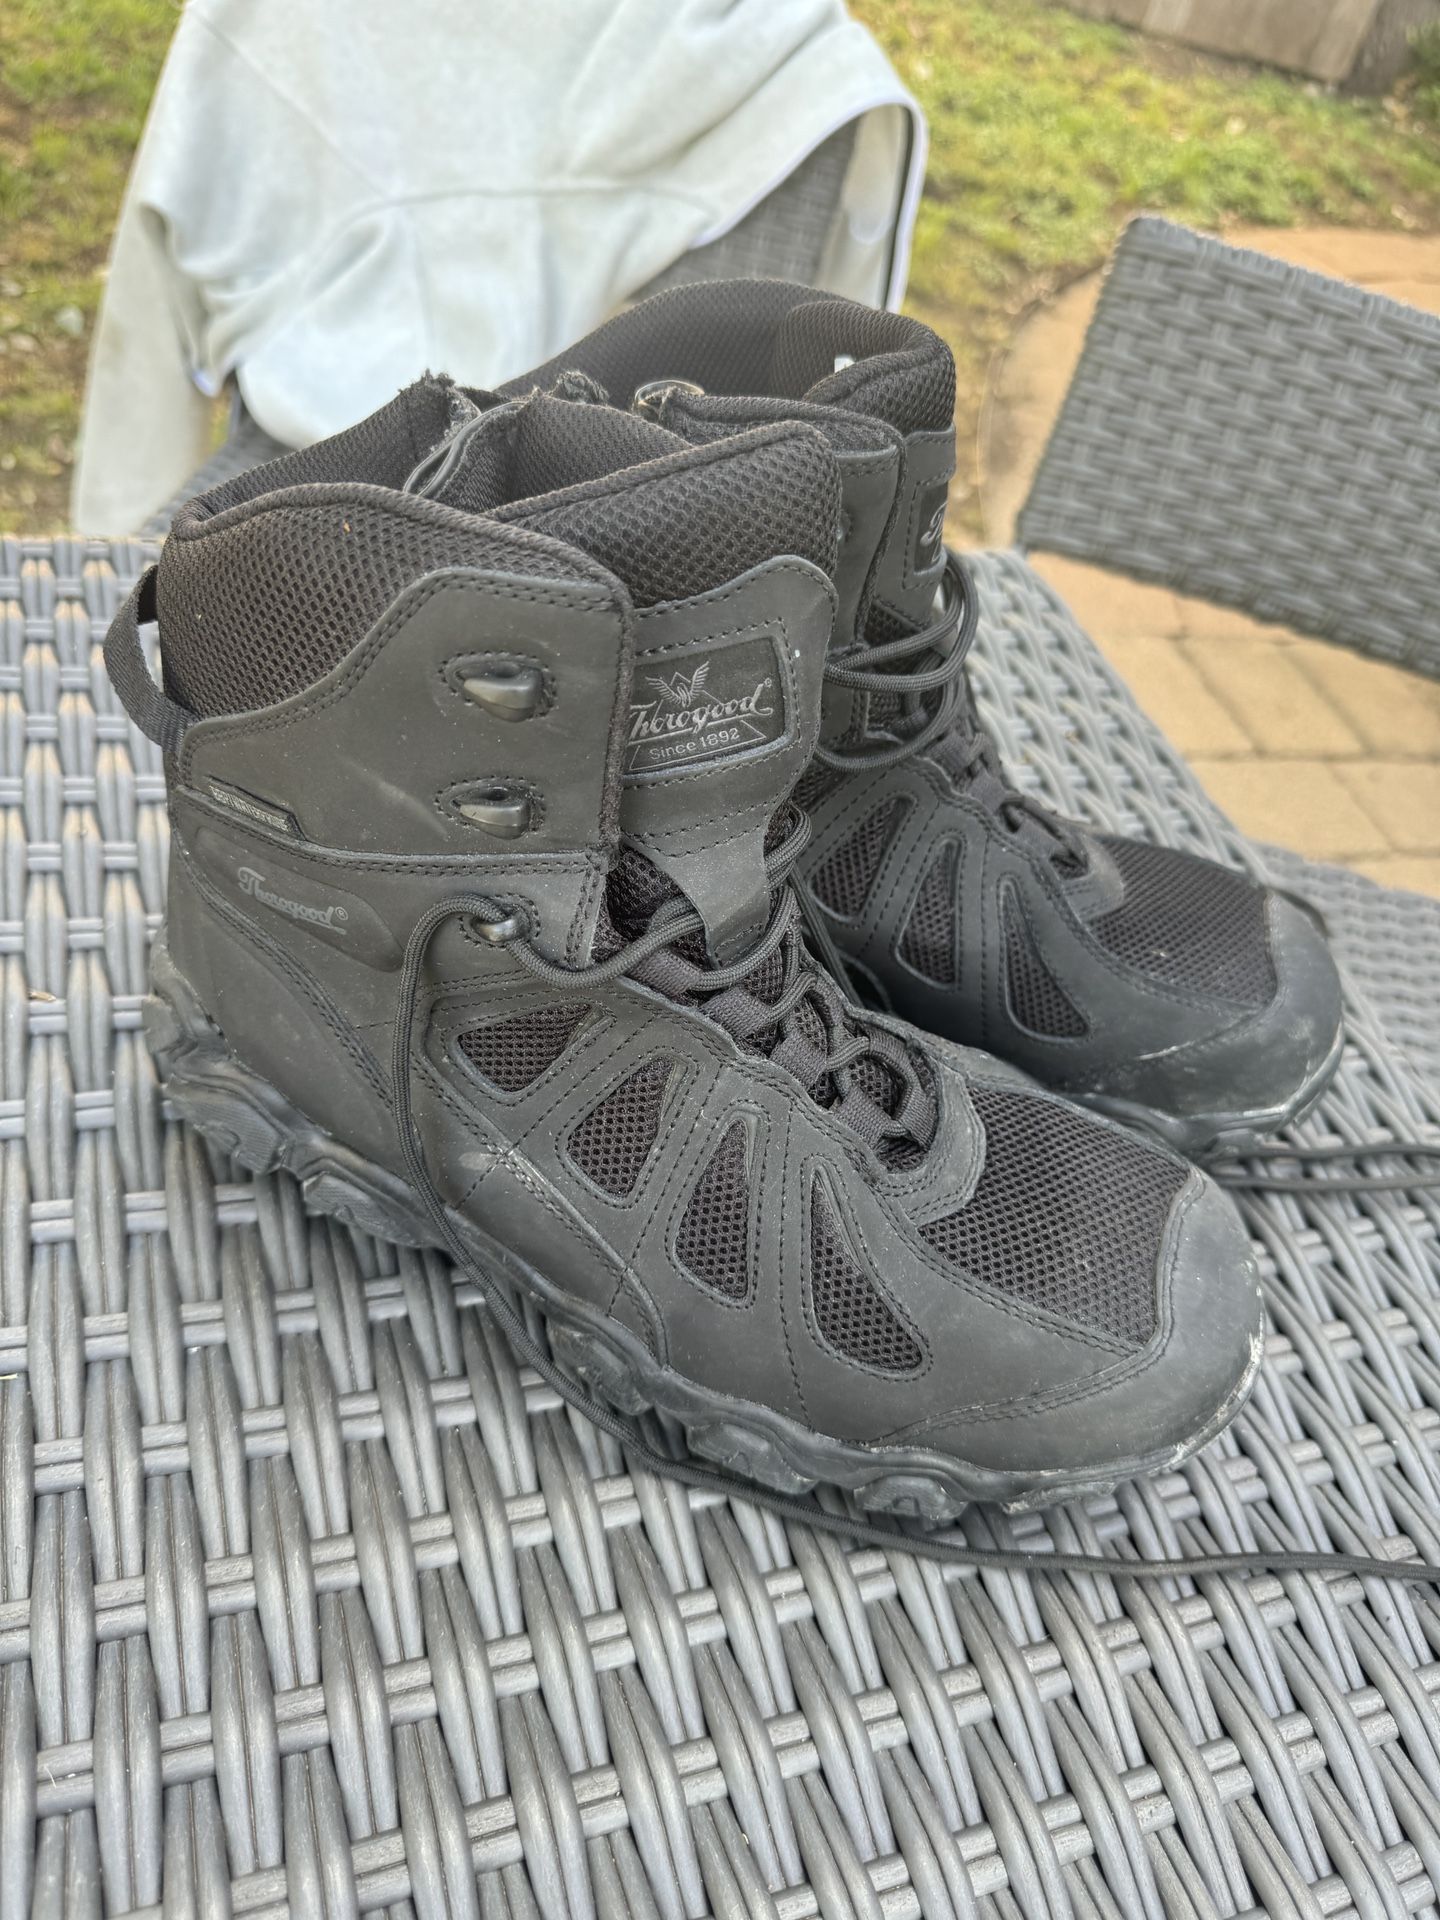 Thorogood Composite 6” “steel Toe” Boots Waterproof 